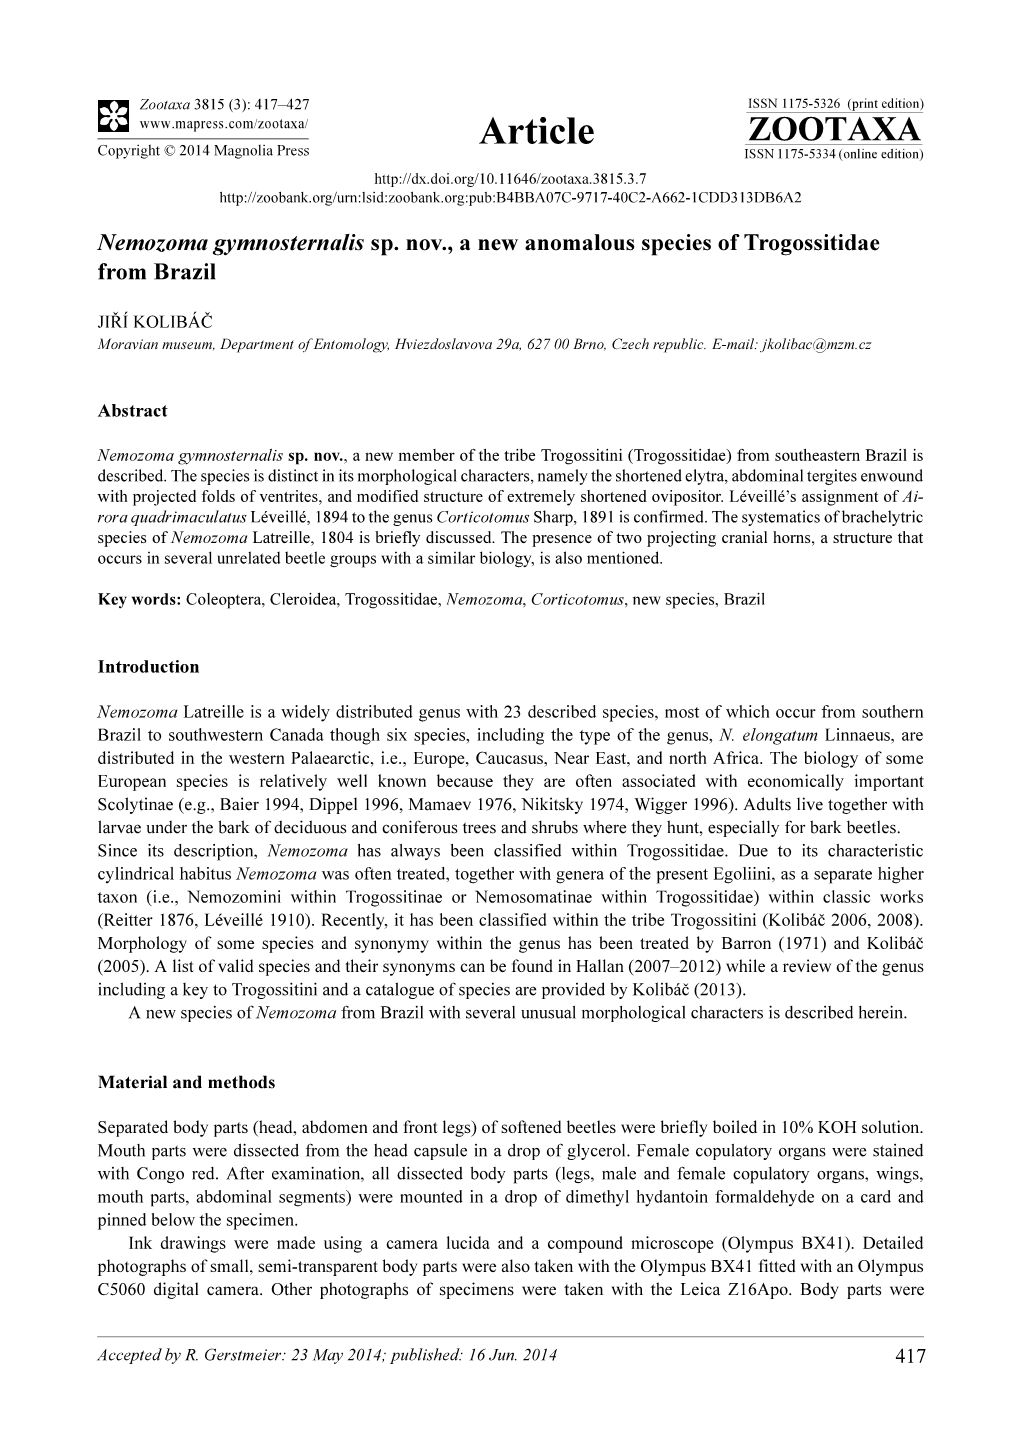 Nemozoma Gymnosternalis Sp. Nov., a New Anomalous Species of Trogossitidae from Brazil